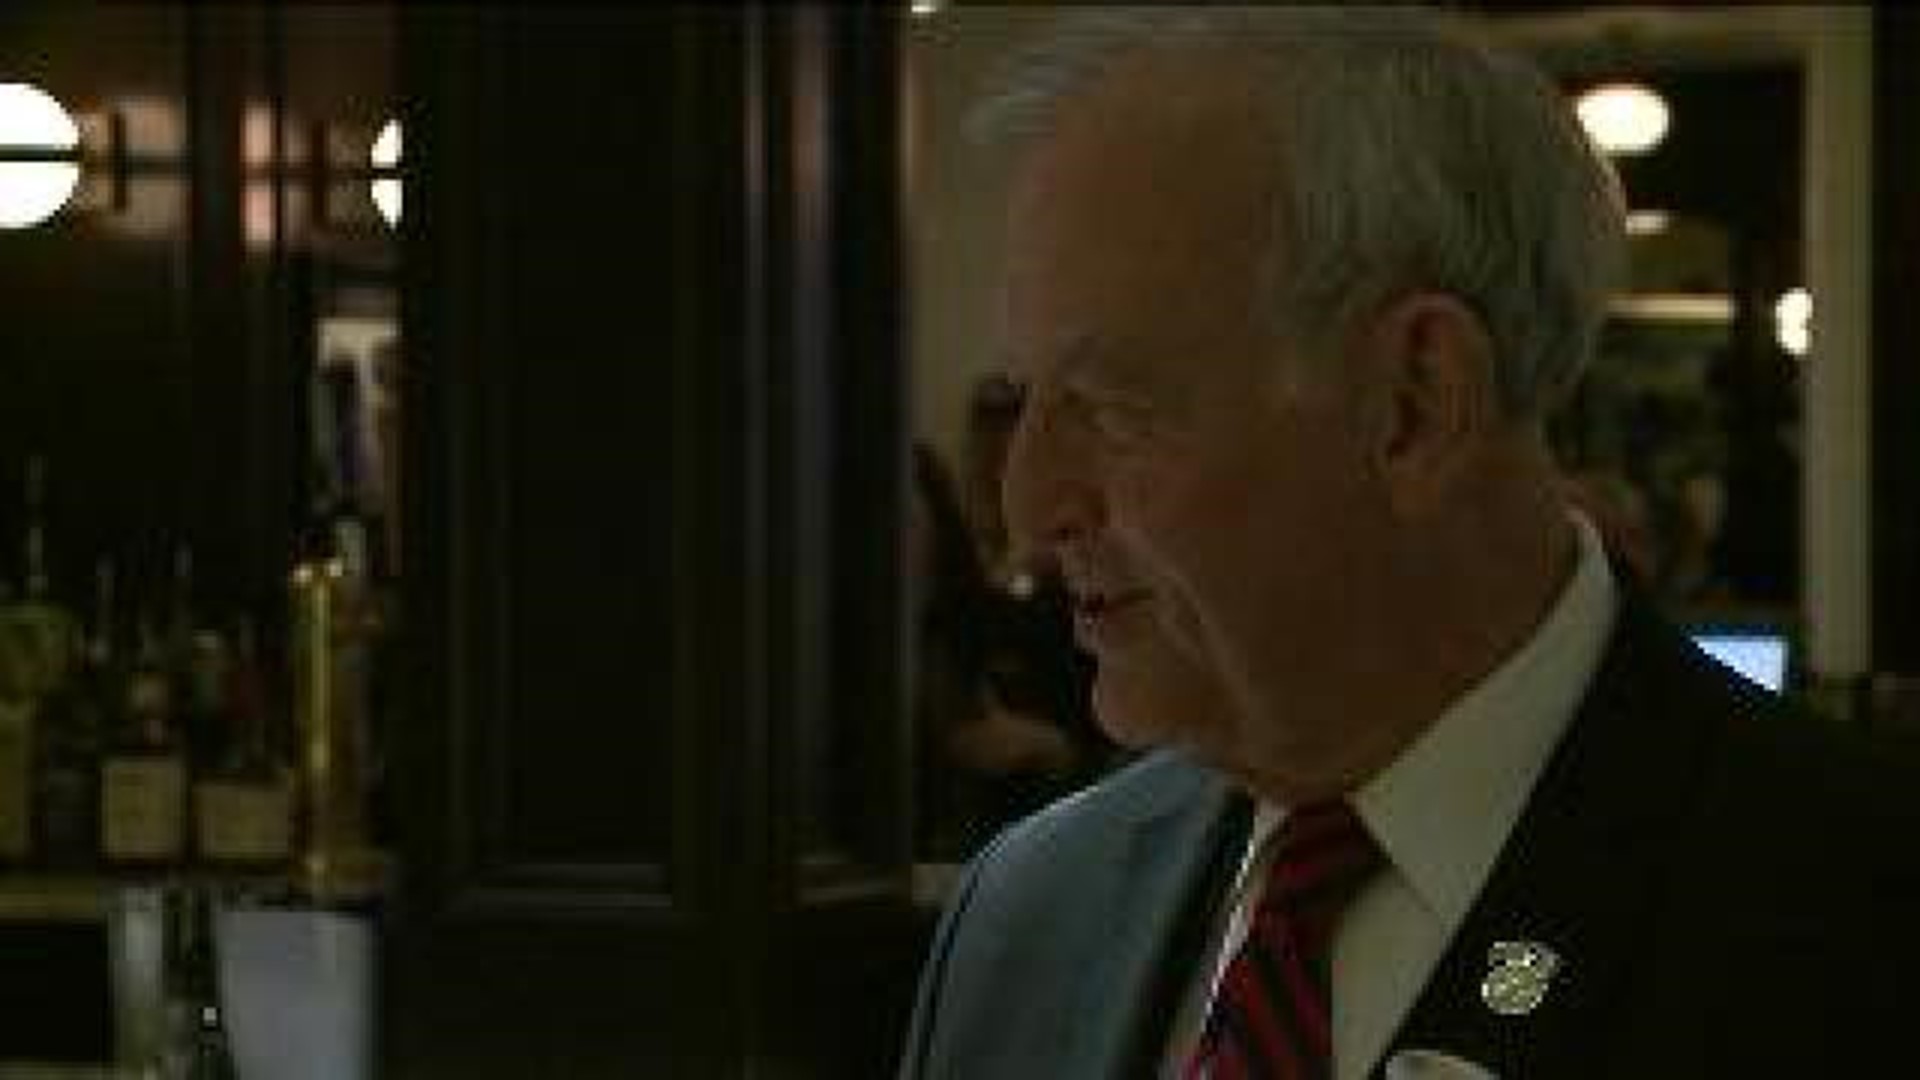 Davenport Mayor Bill Gluba reelected